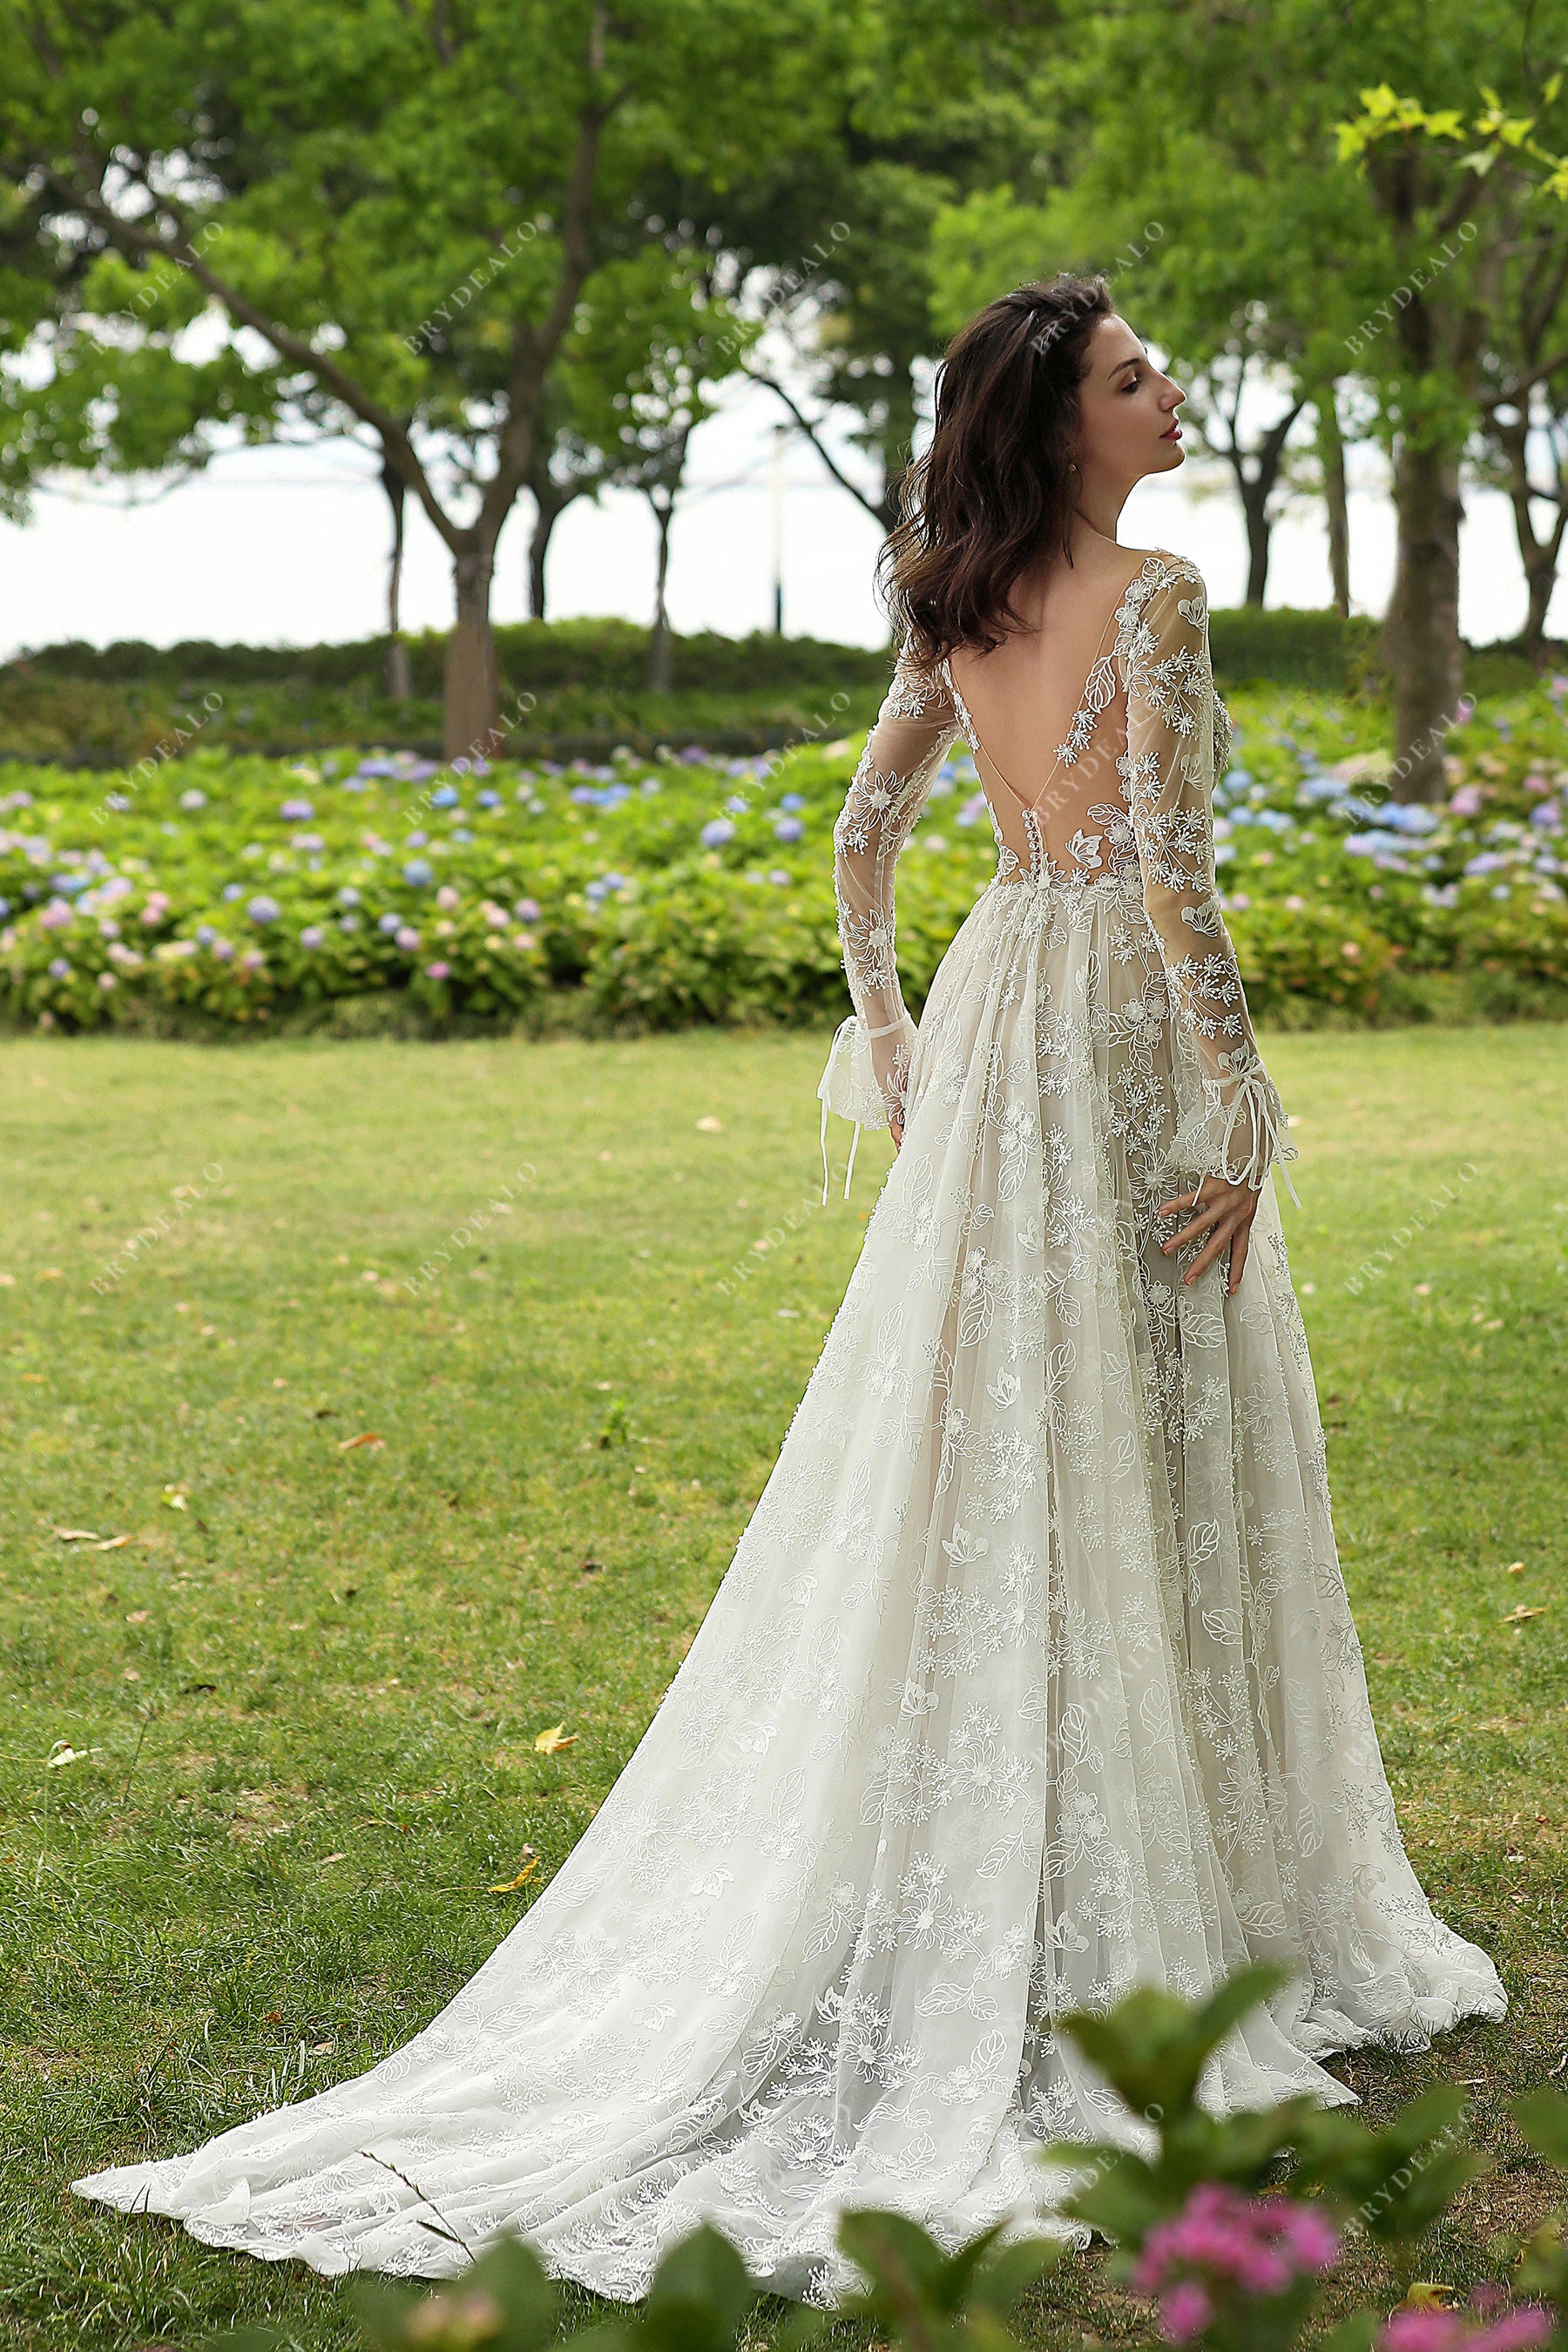 Brydealo Factory's RENAISSANCE: Dreamlike Bridal Elegance